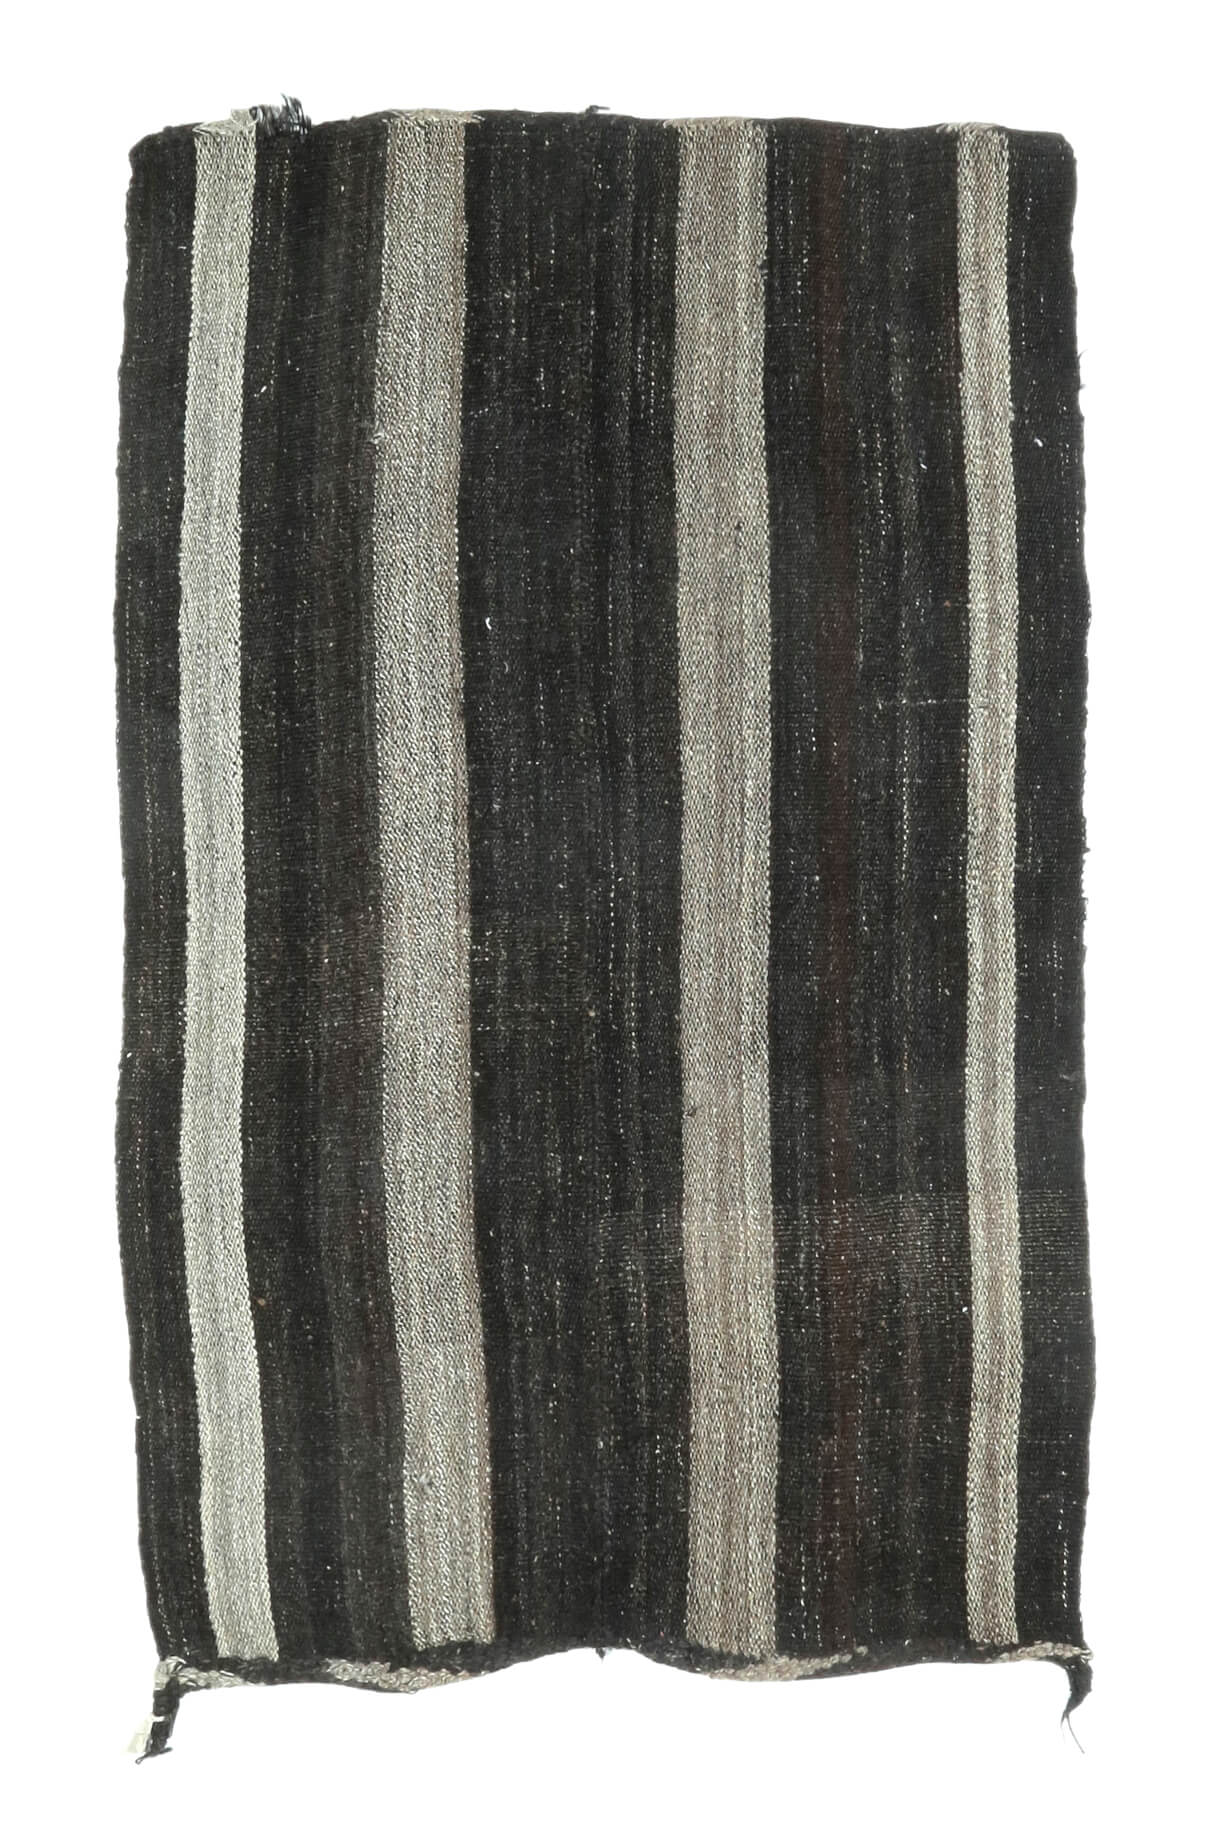 Halle - Black Striped Kilim